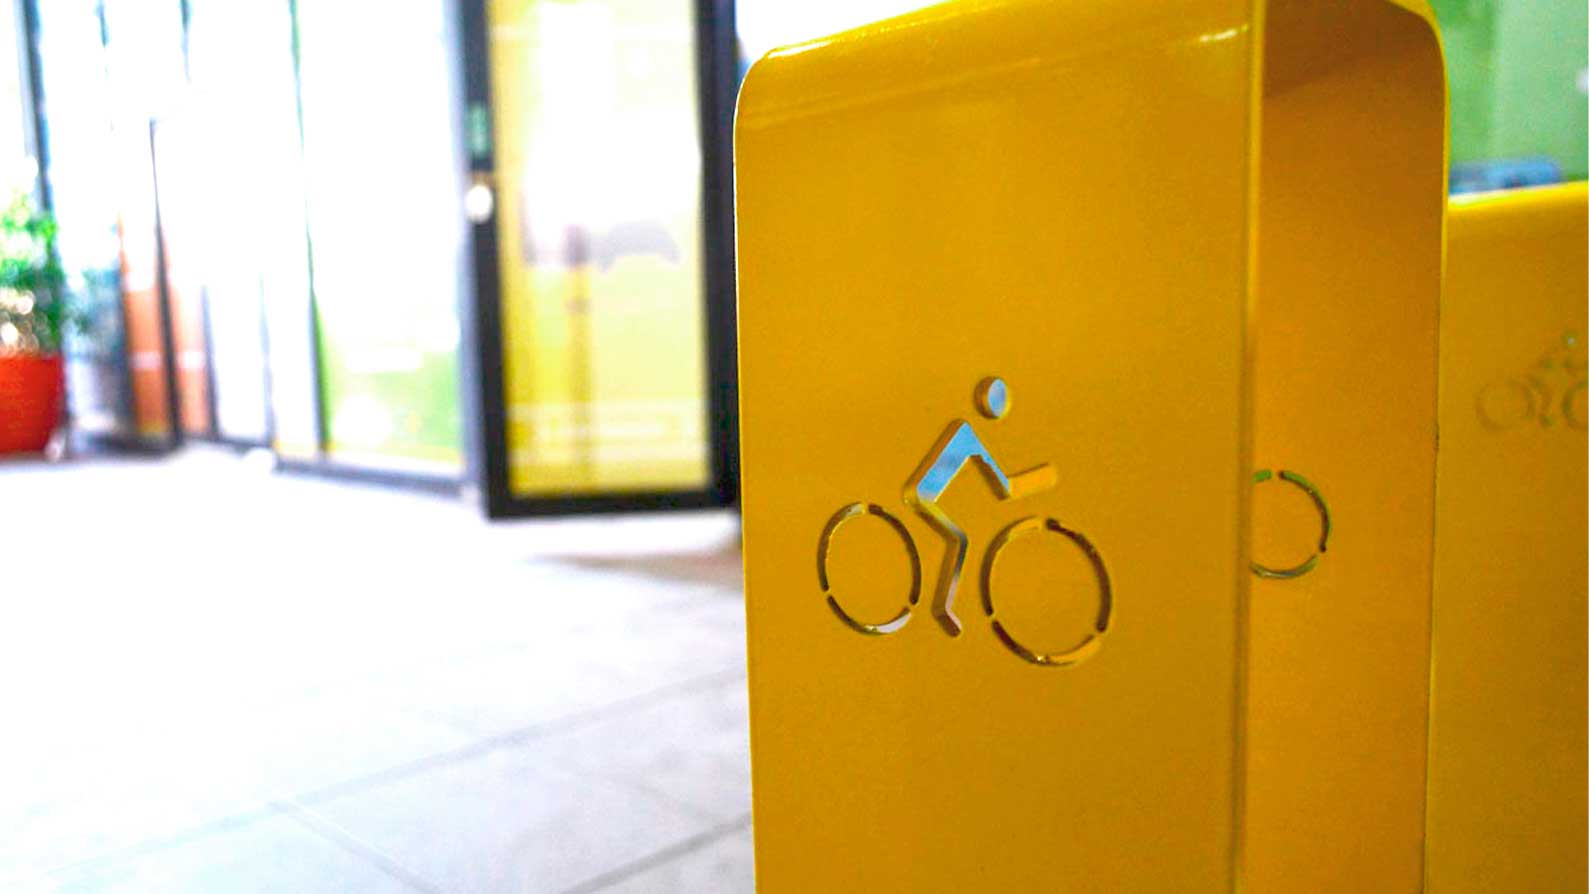 bicicletero monociclo espacios publicos moderno 09